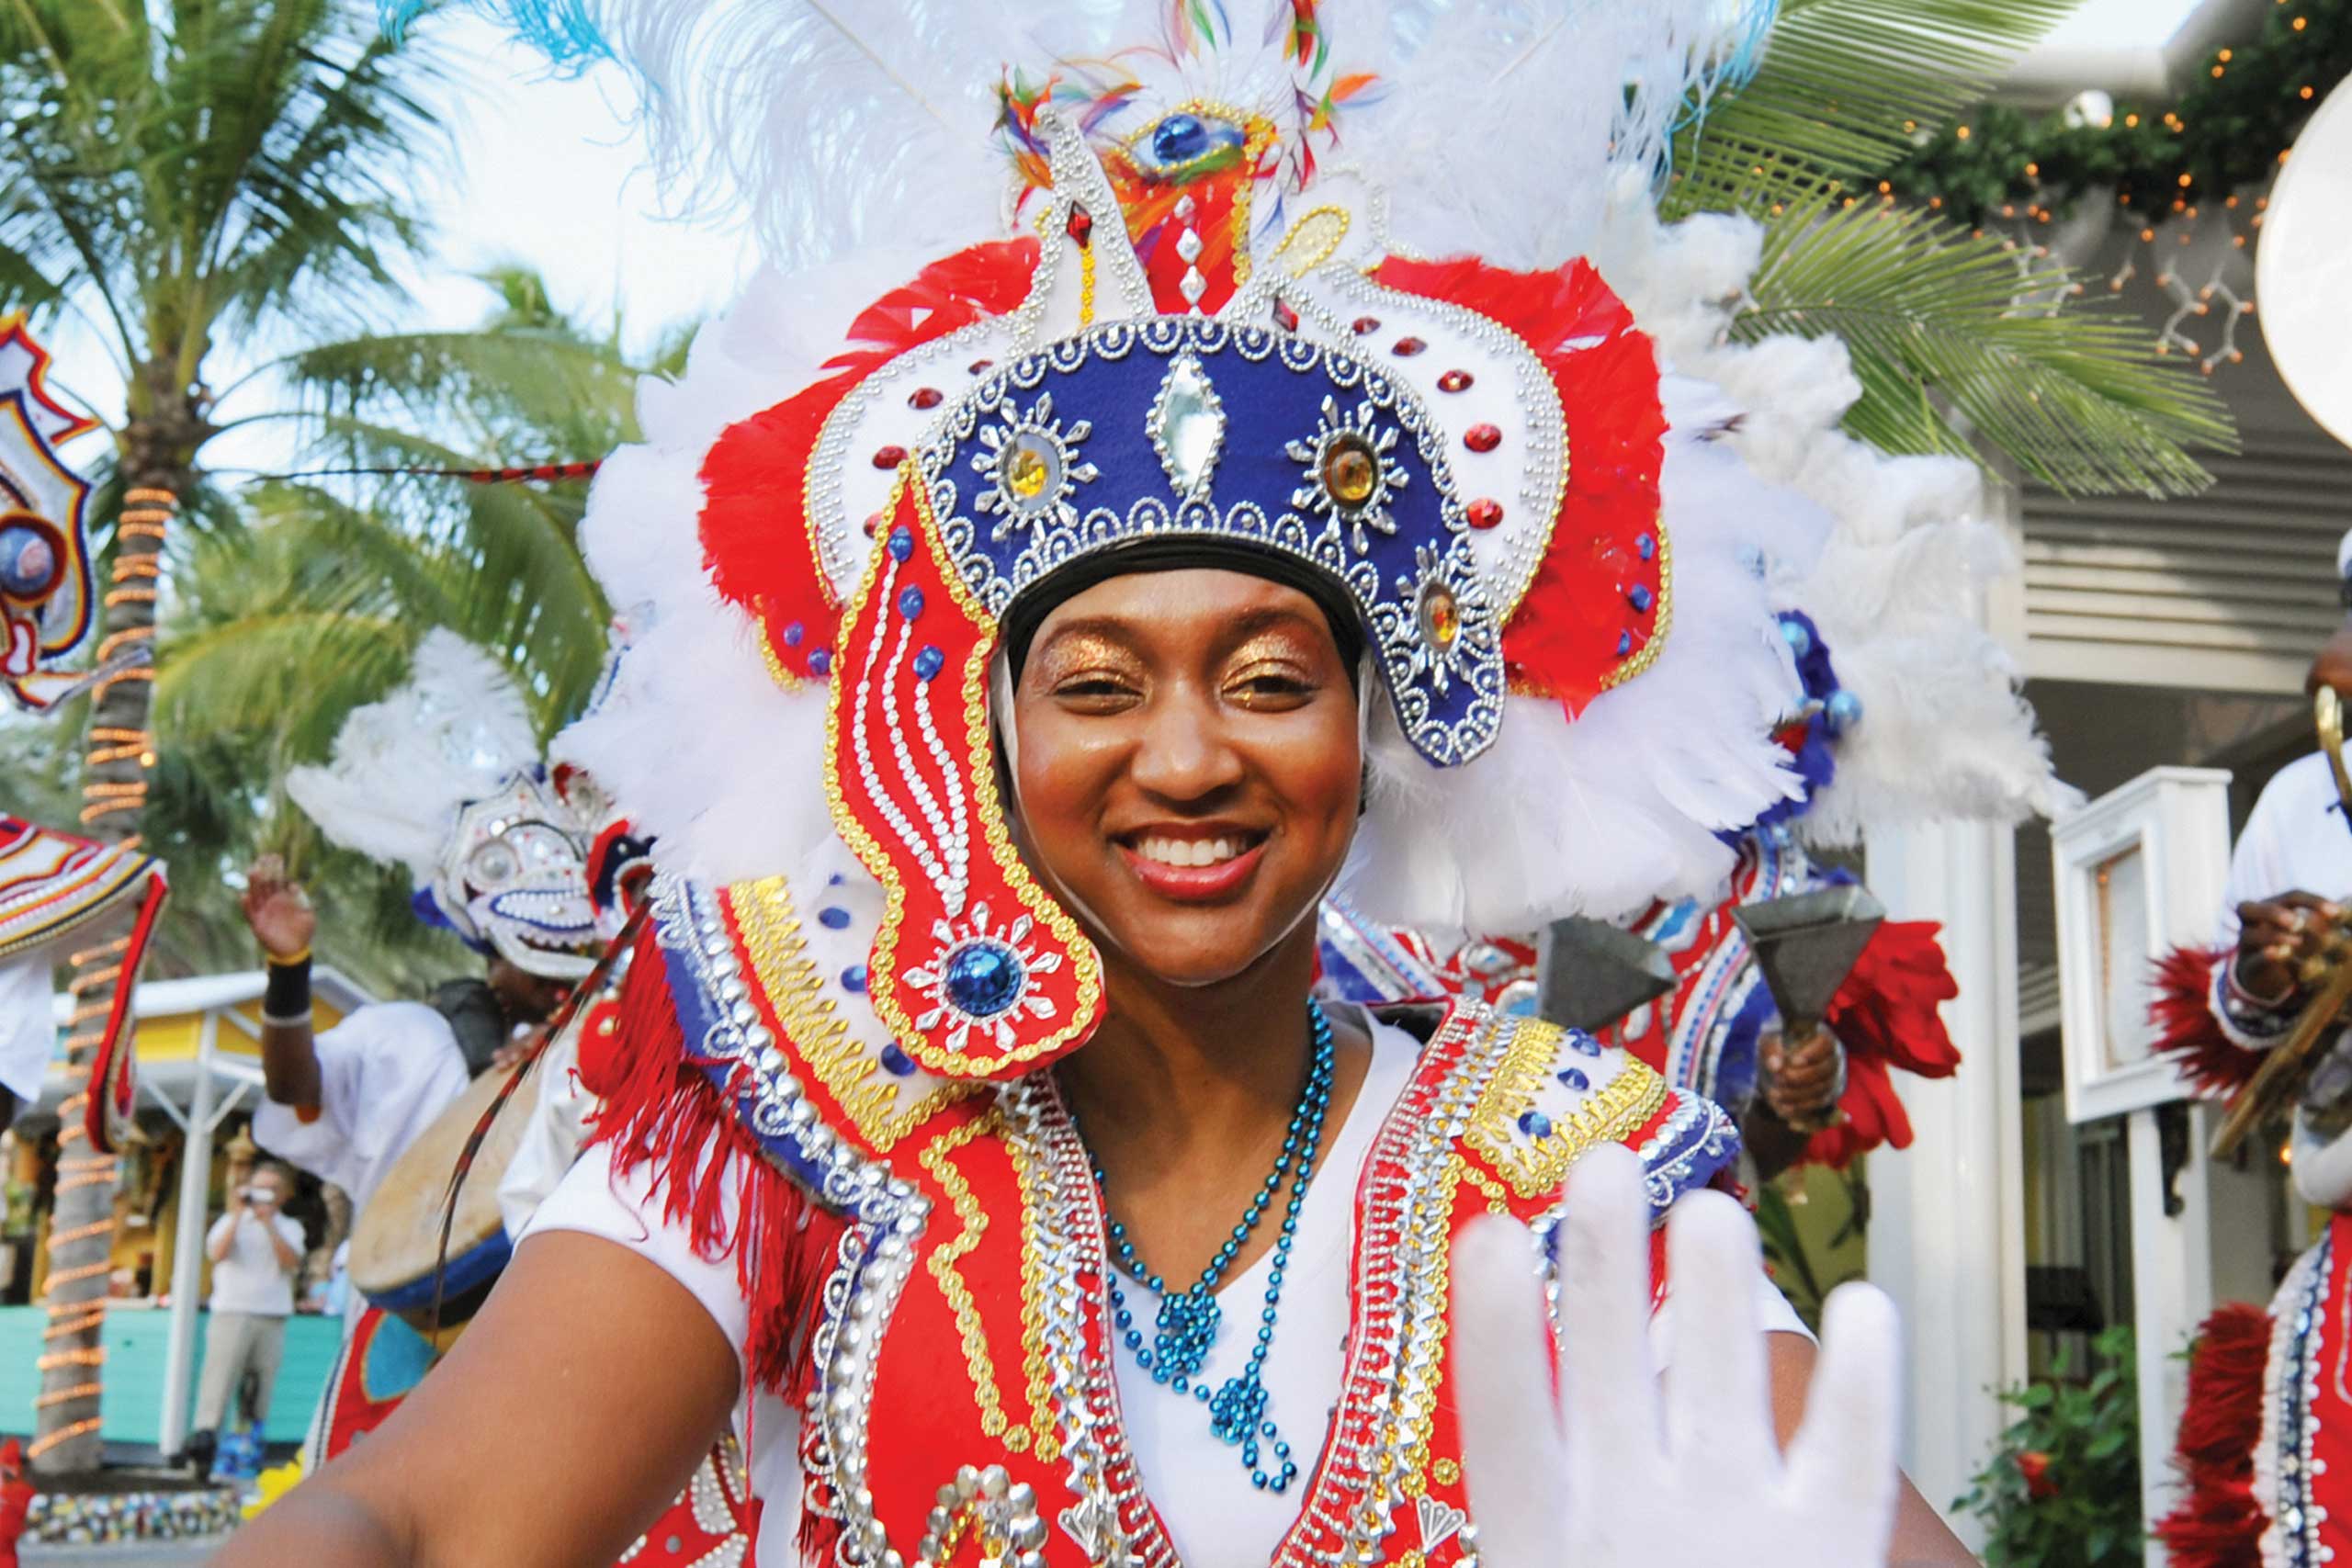 Dancer in colorful festive attire with headdress